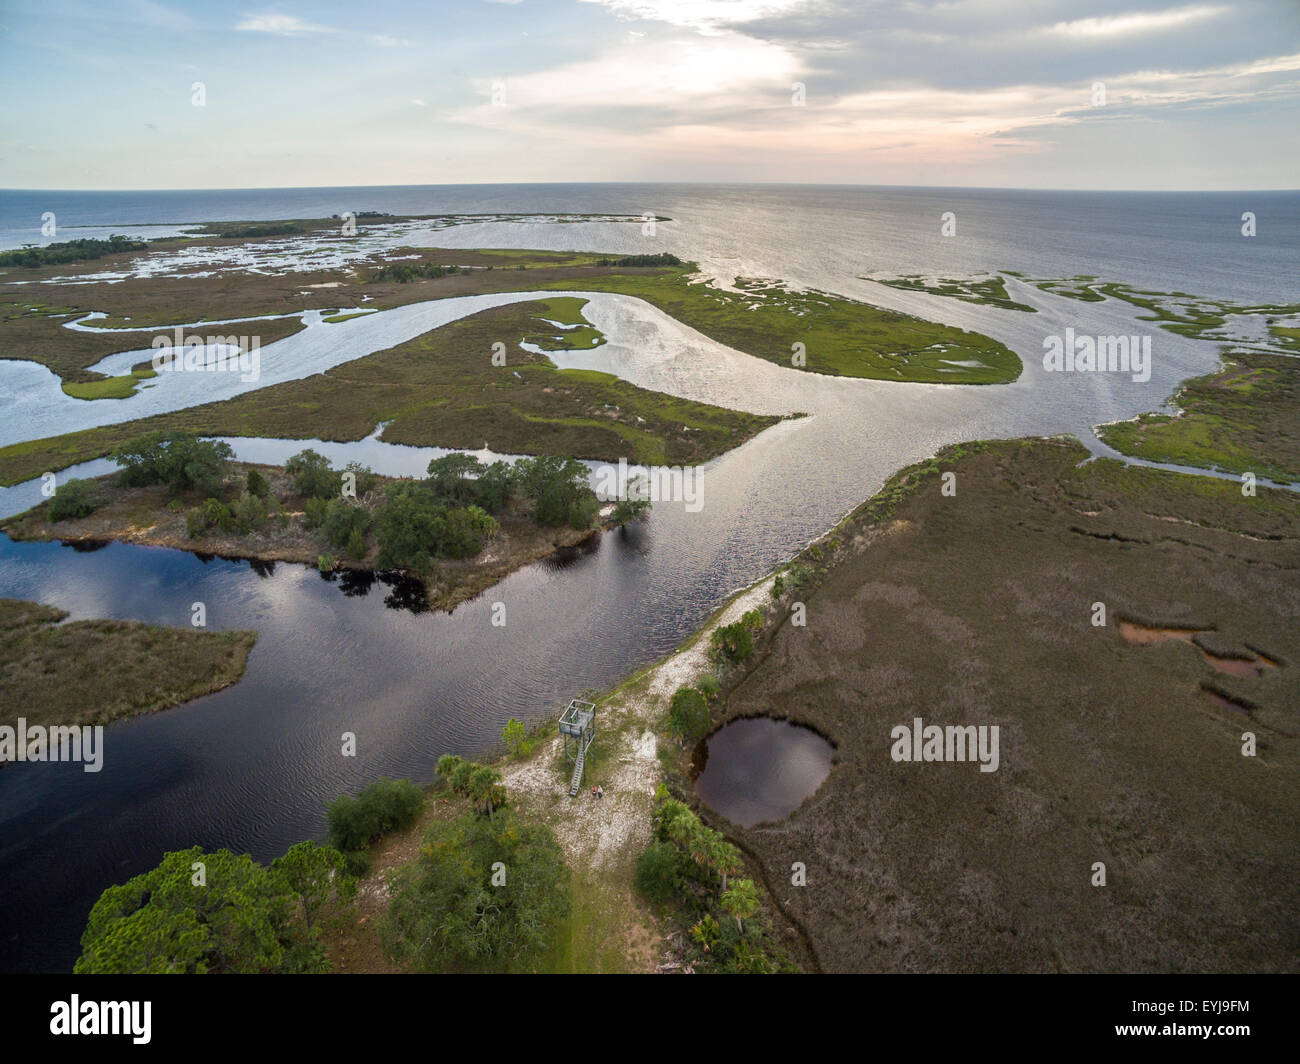 Salz-Sumpf Futter Fish Creek, Big Bend Seegraswiesen aquatische bewahren, Florida Stockfoto